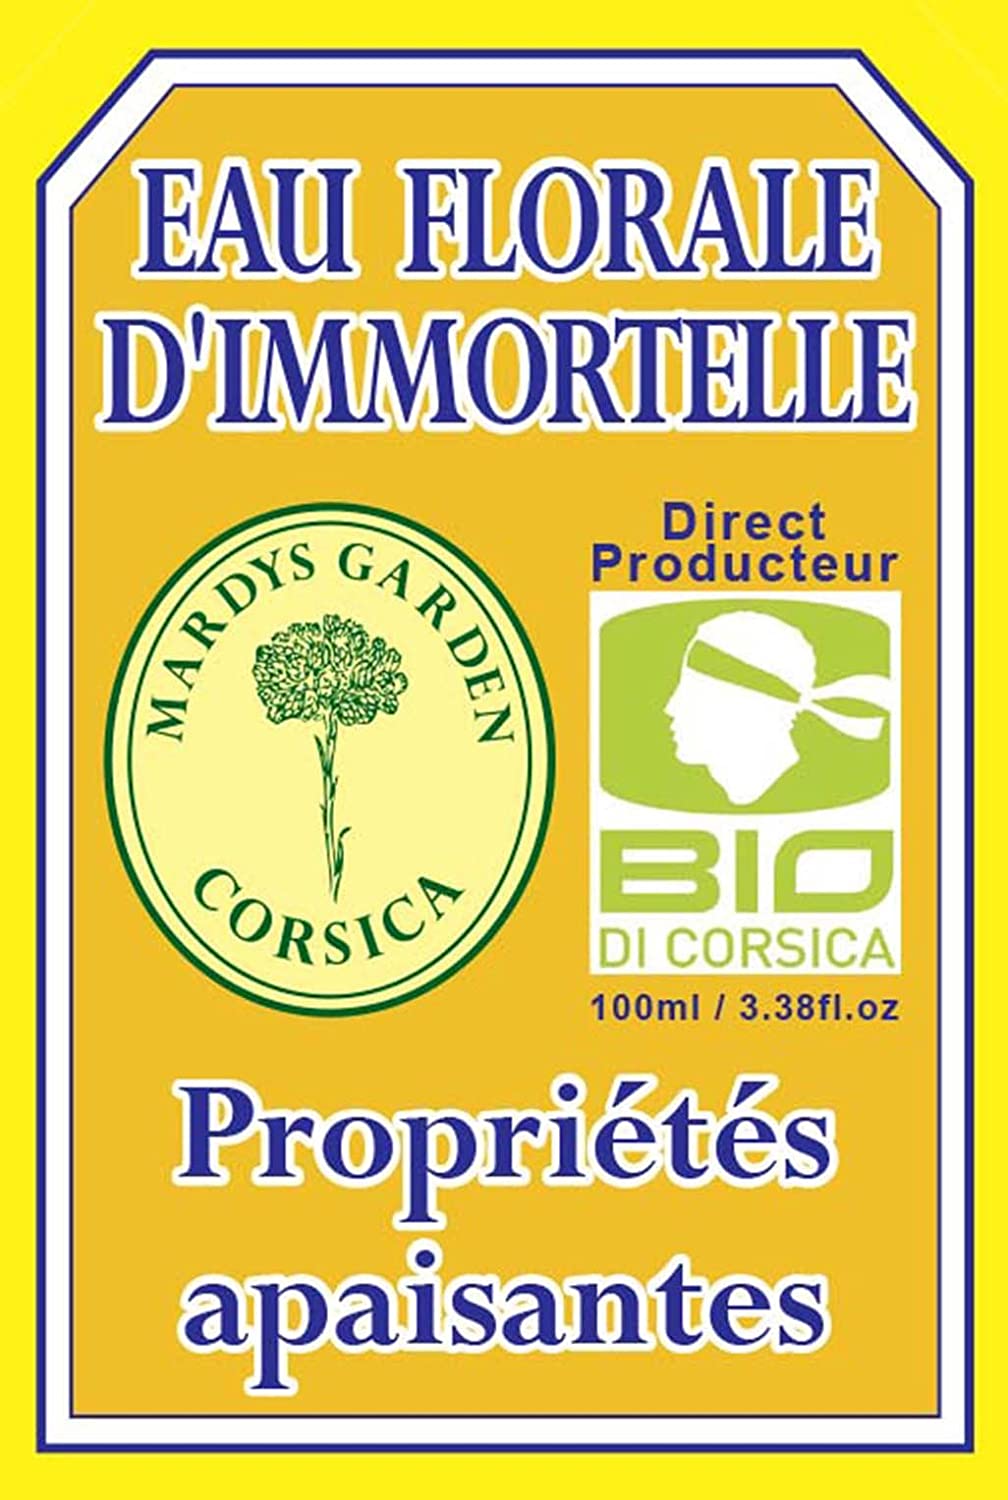 Front label Organic Immortelle Hydrosol 100ml. Soothin properties. Direct producer. BIO DI CORSICA. MARDYS GARDEN